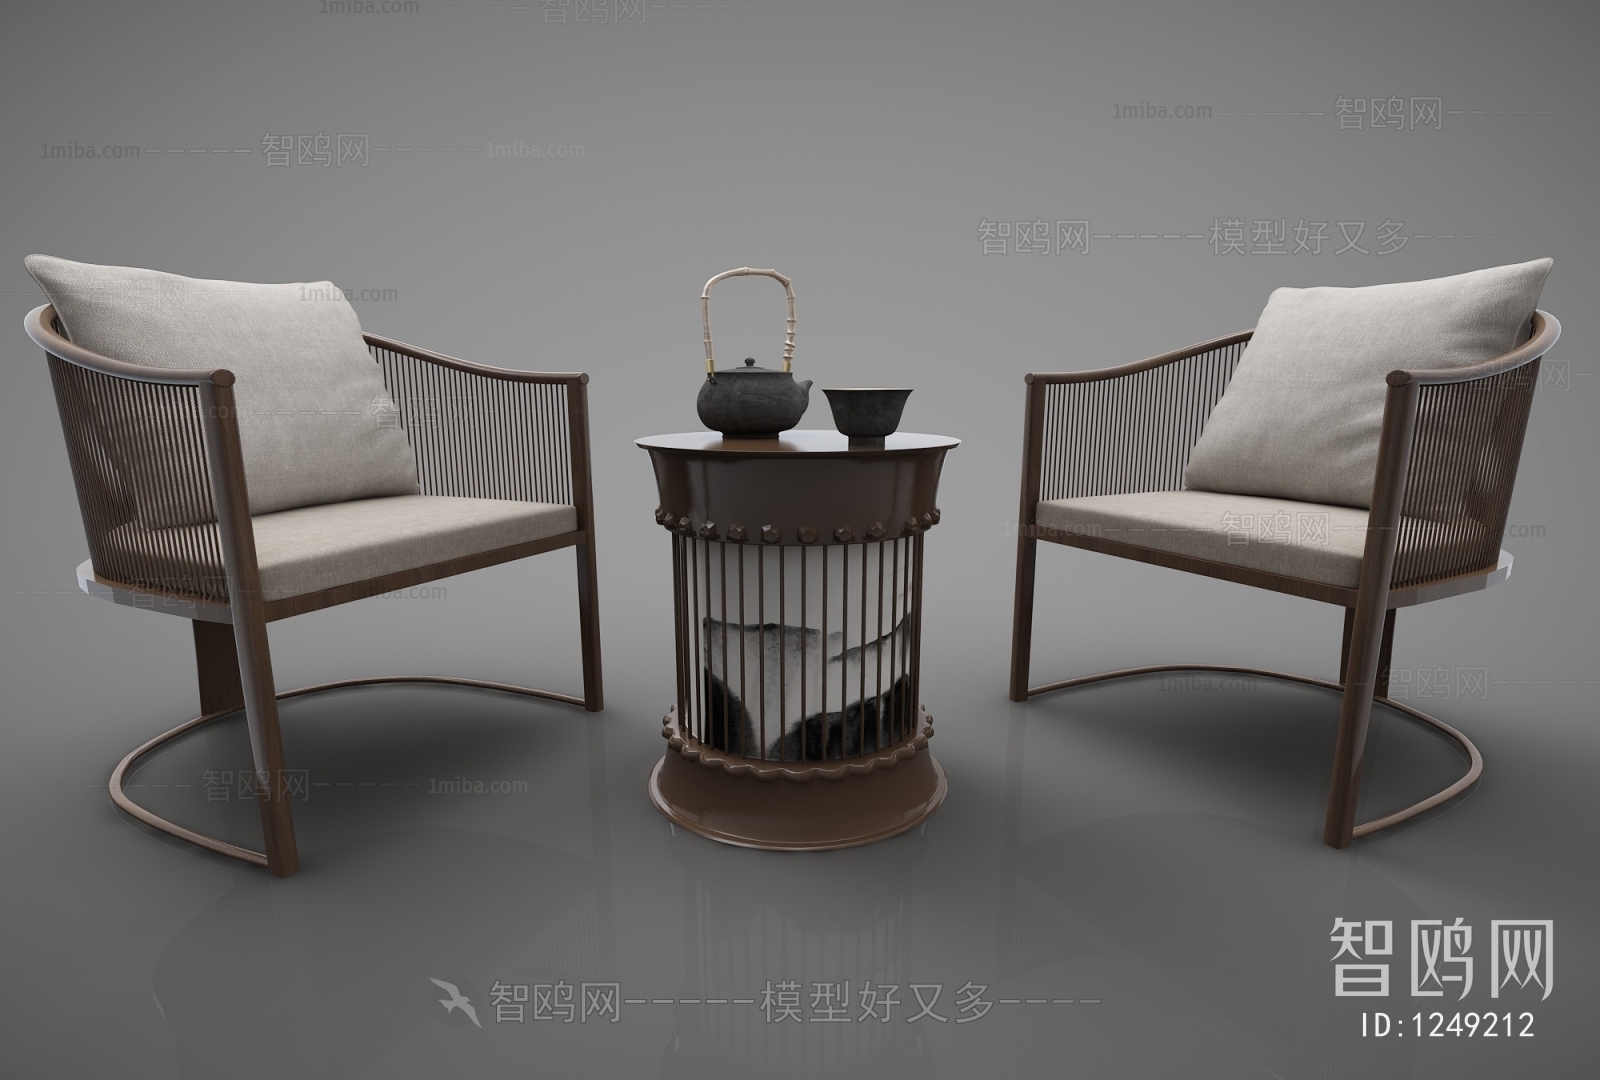 New Chinese Style Single Sofa